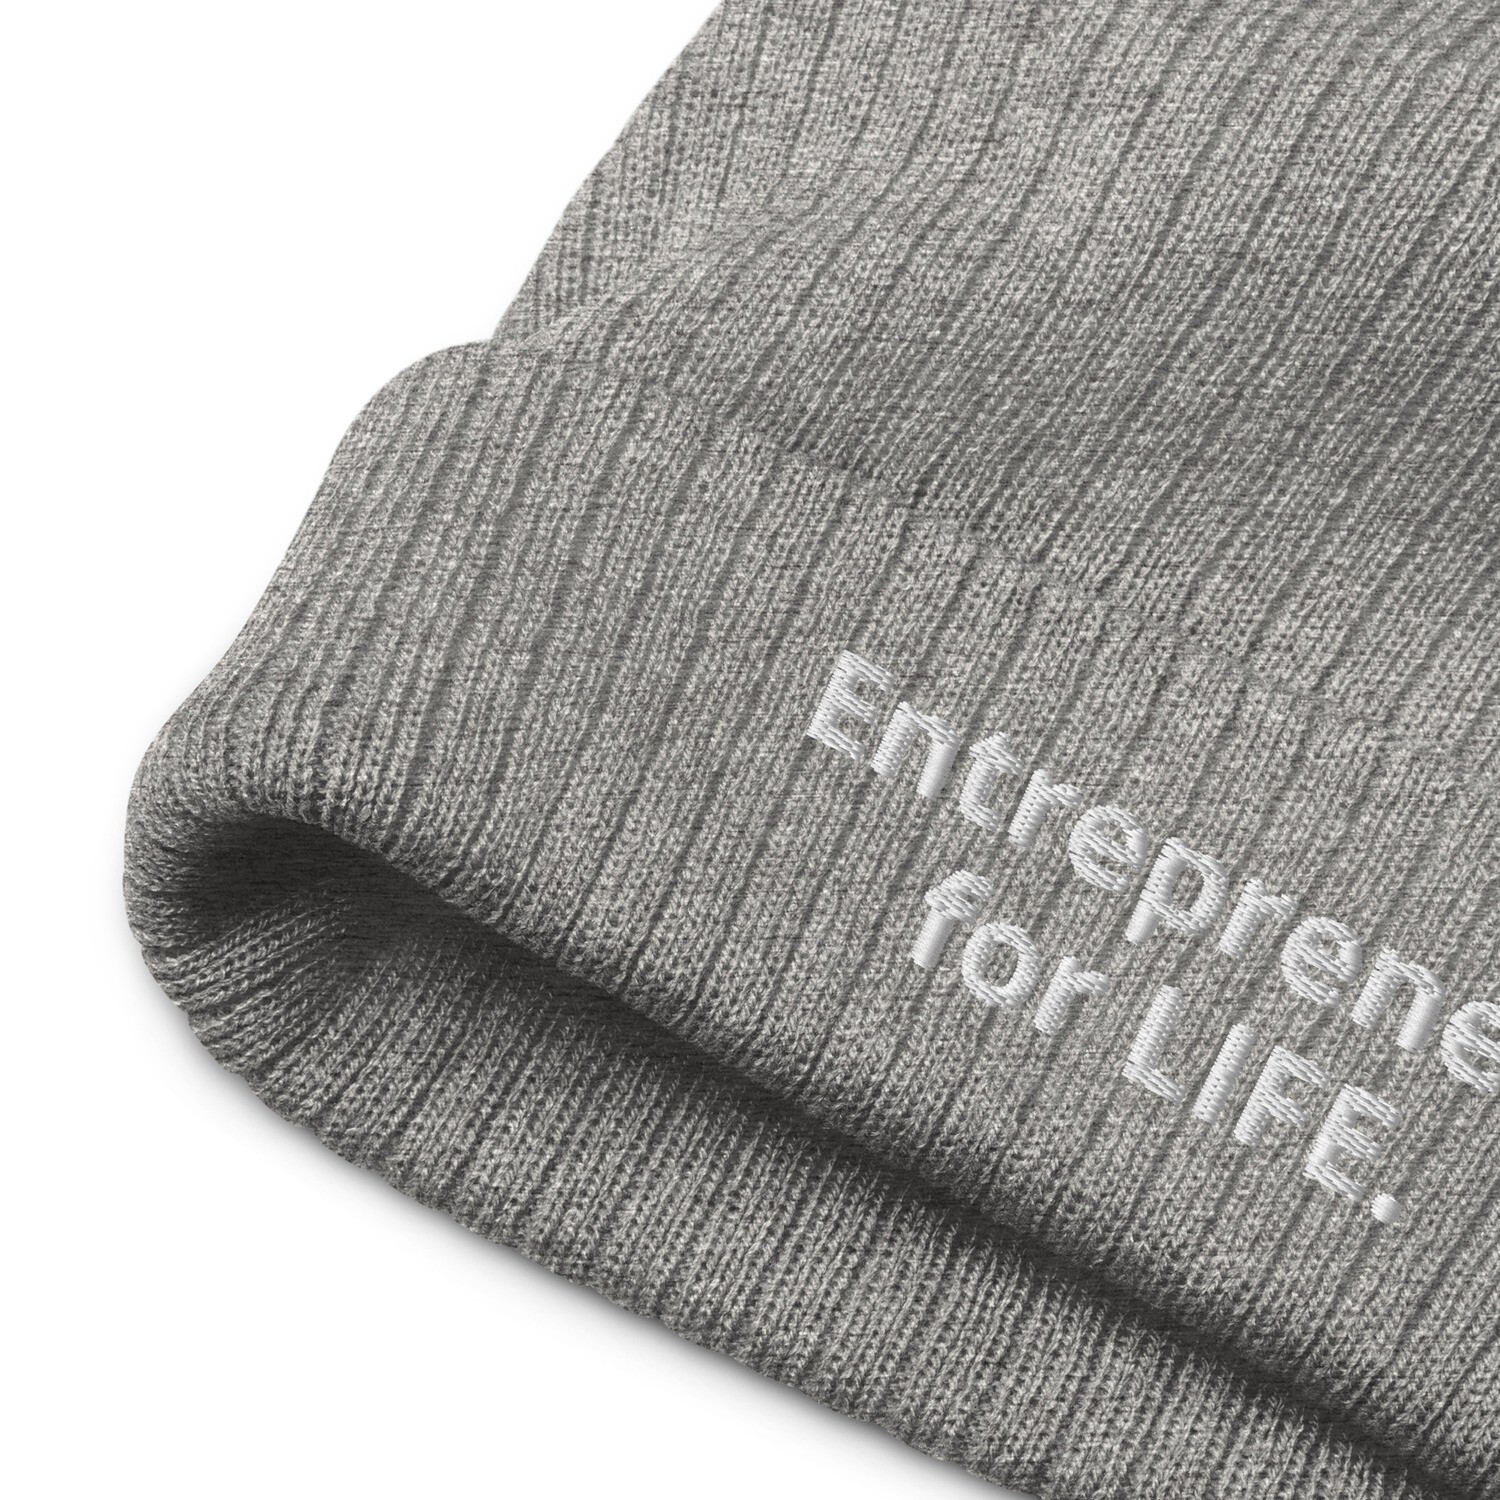 Entrepreneur for Life Ribbed knit beanie